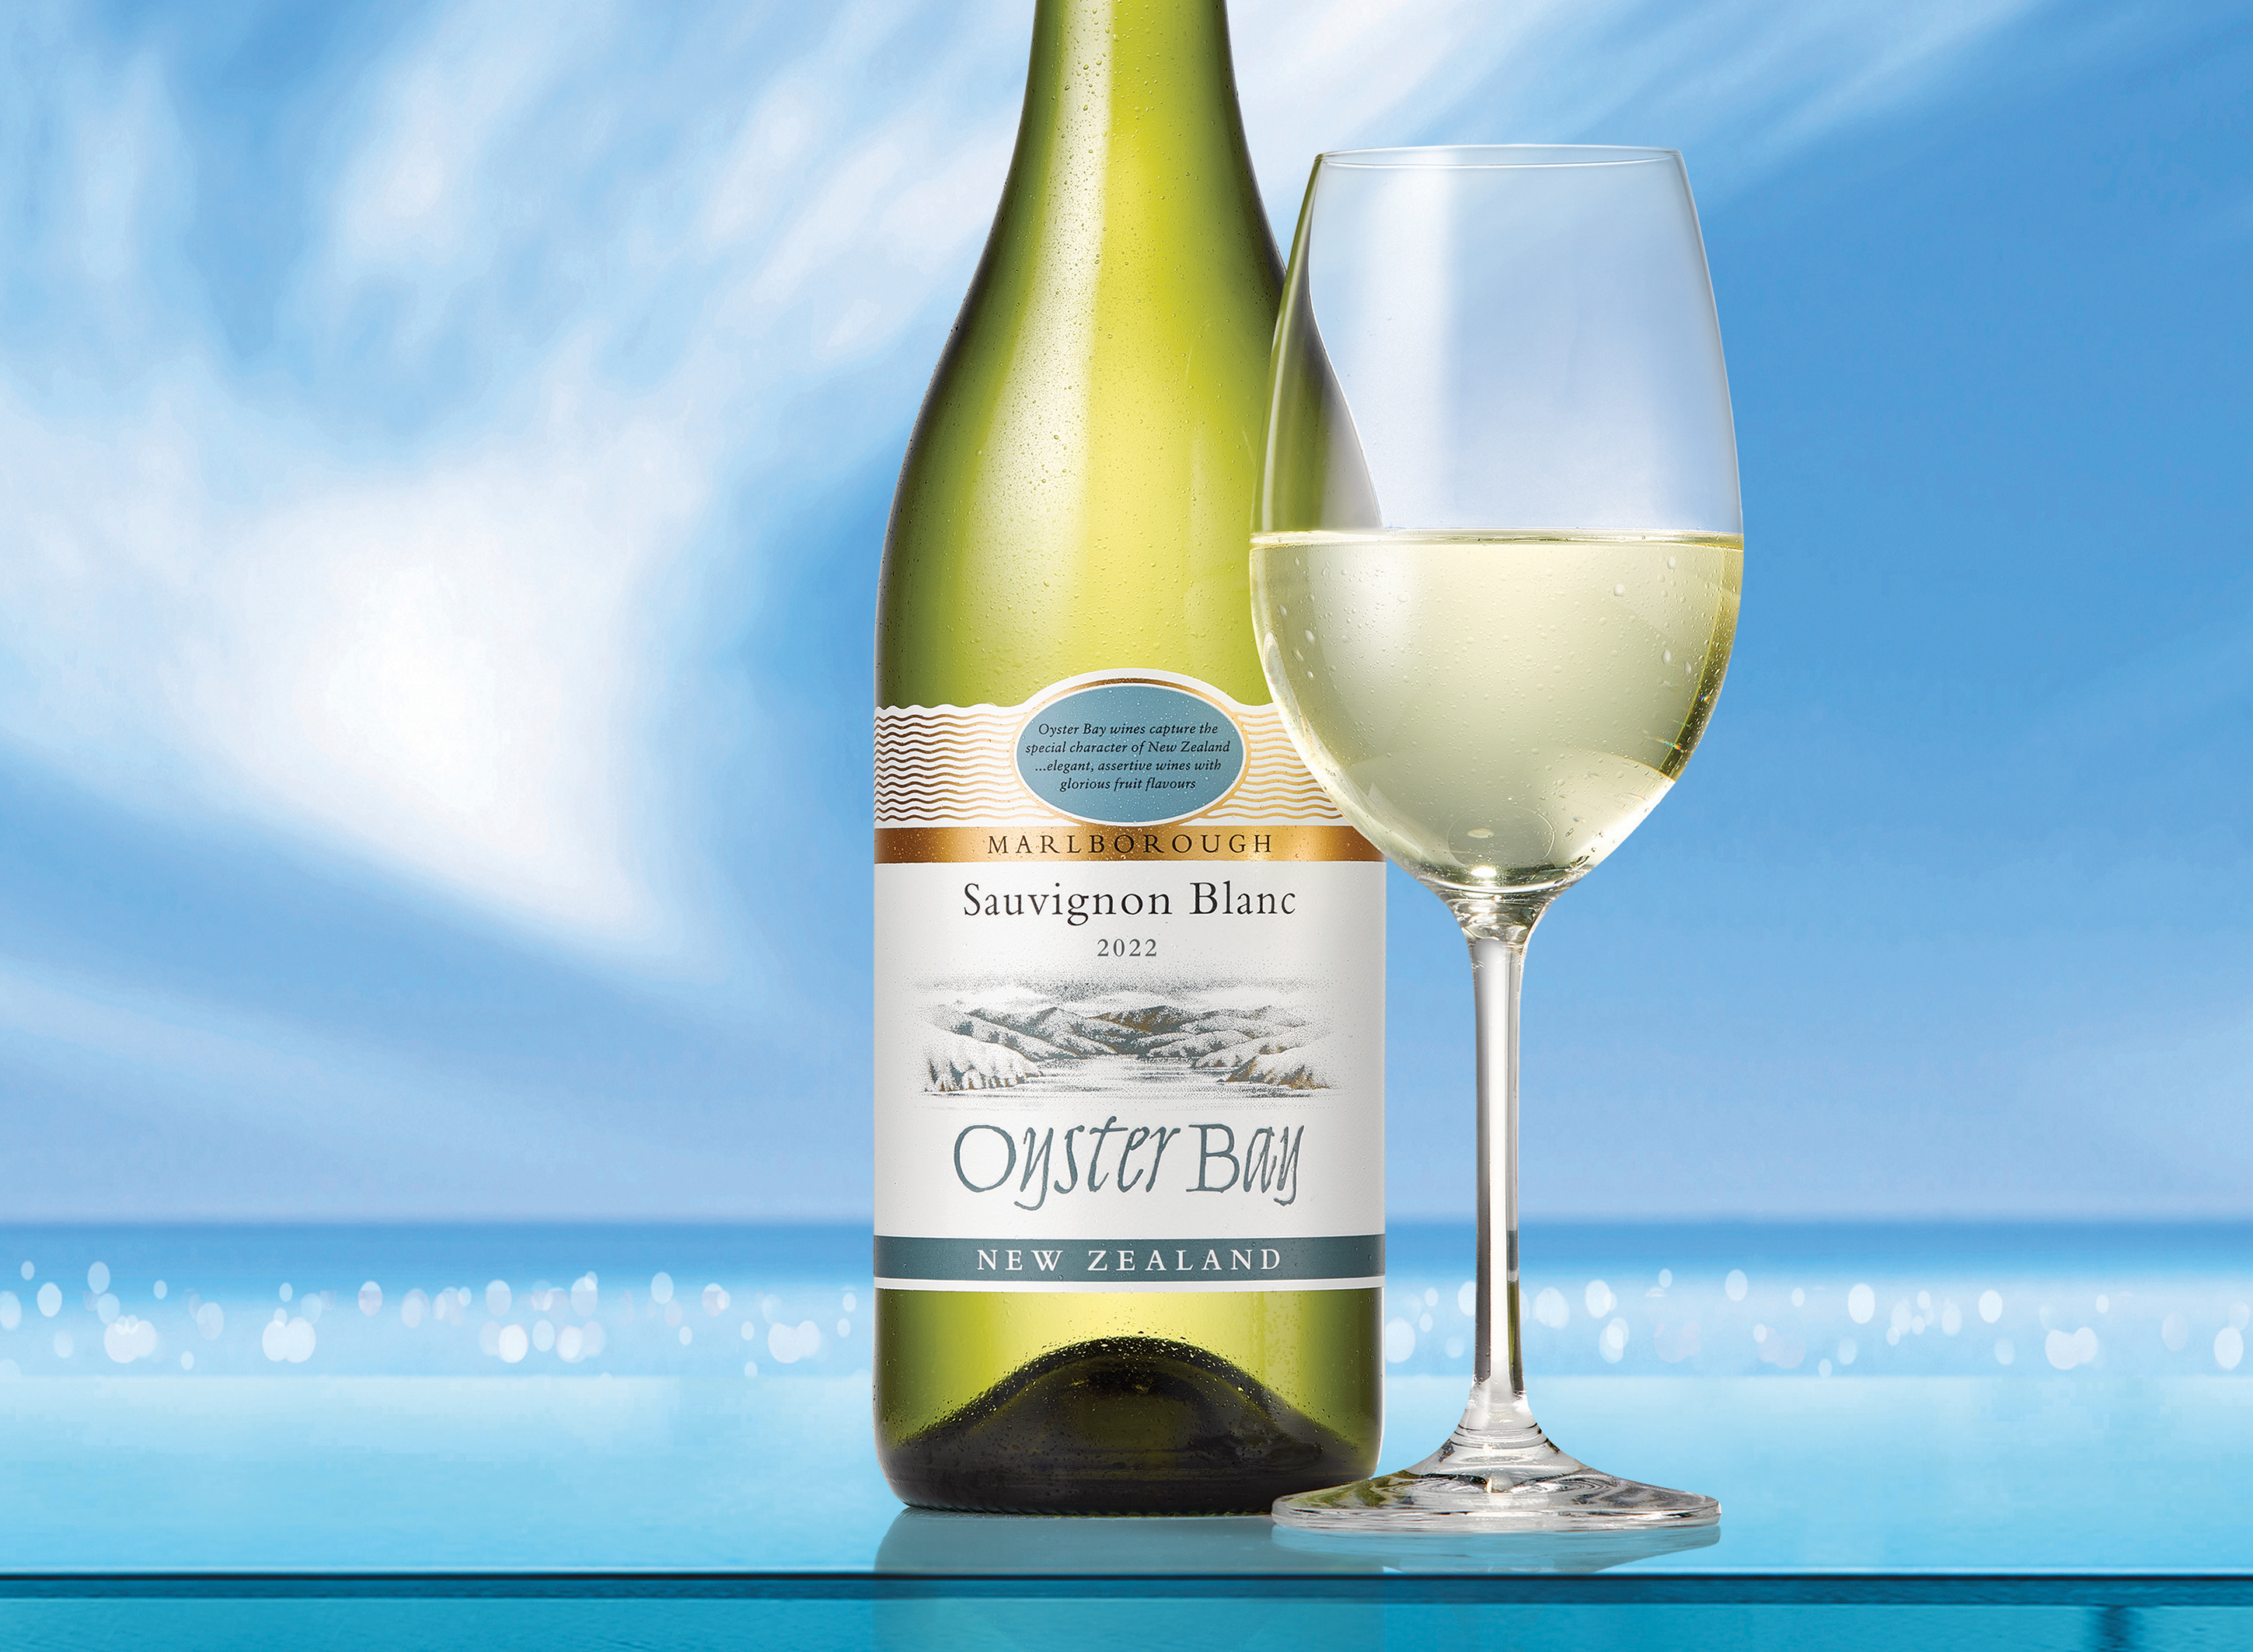 Oyster Bay Marlborough New Zealand Sauvignon Blanc Wine bottle next to full glass